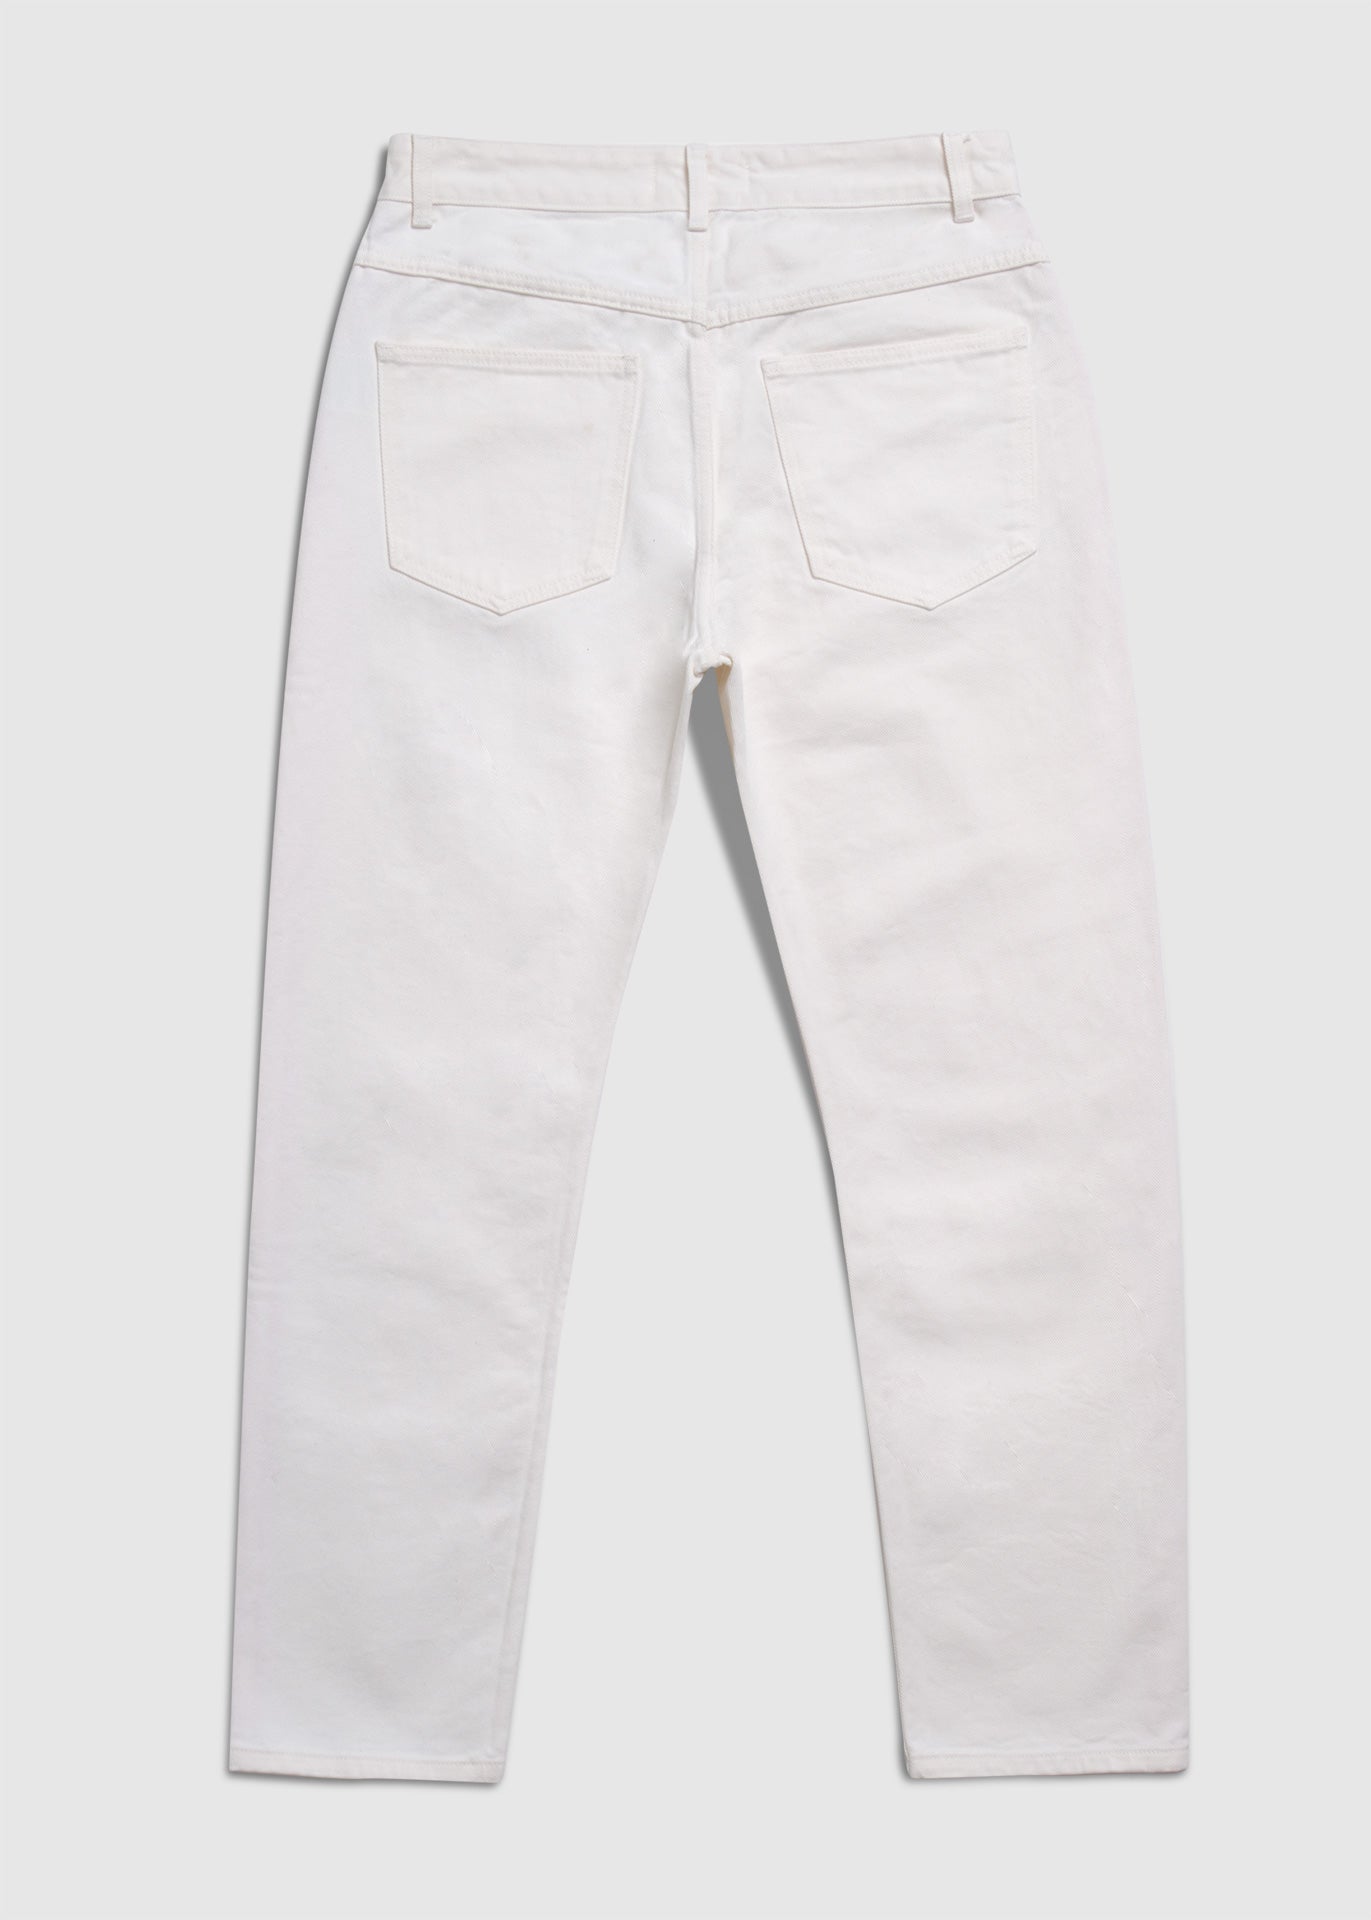 The White Jean